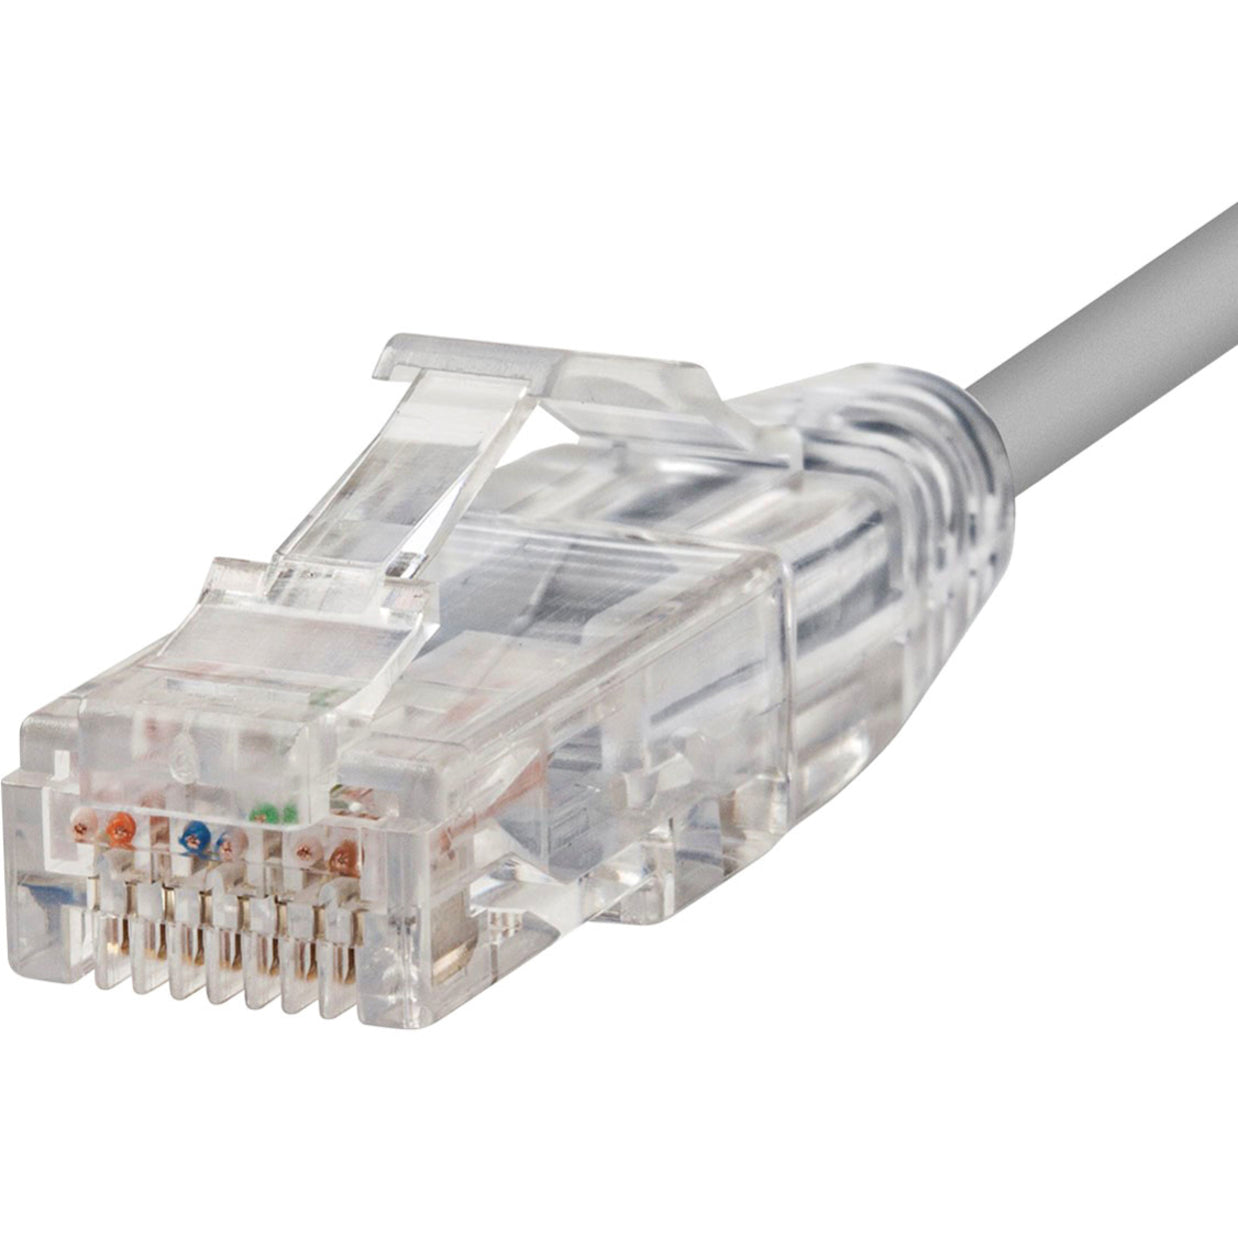 Monoprice 13549 SlimRun Cat6 28AWG UTP Ethernet Network Cable, 14ft Gray, Flexible, Snagless